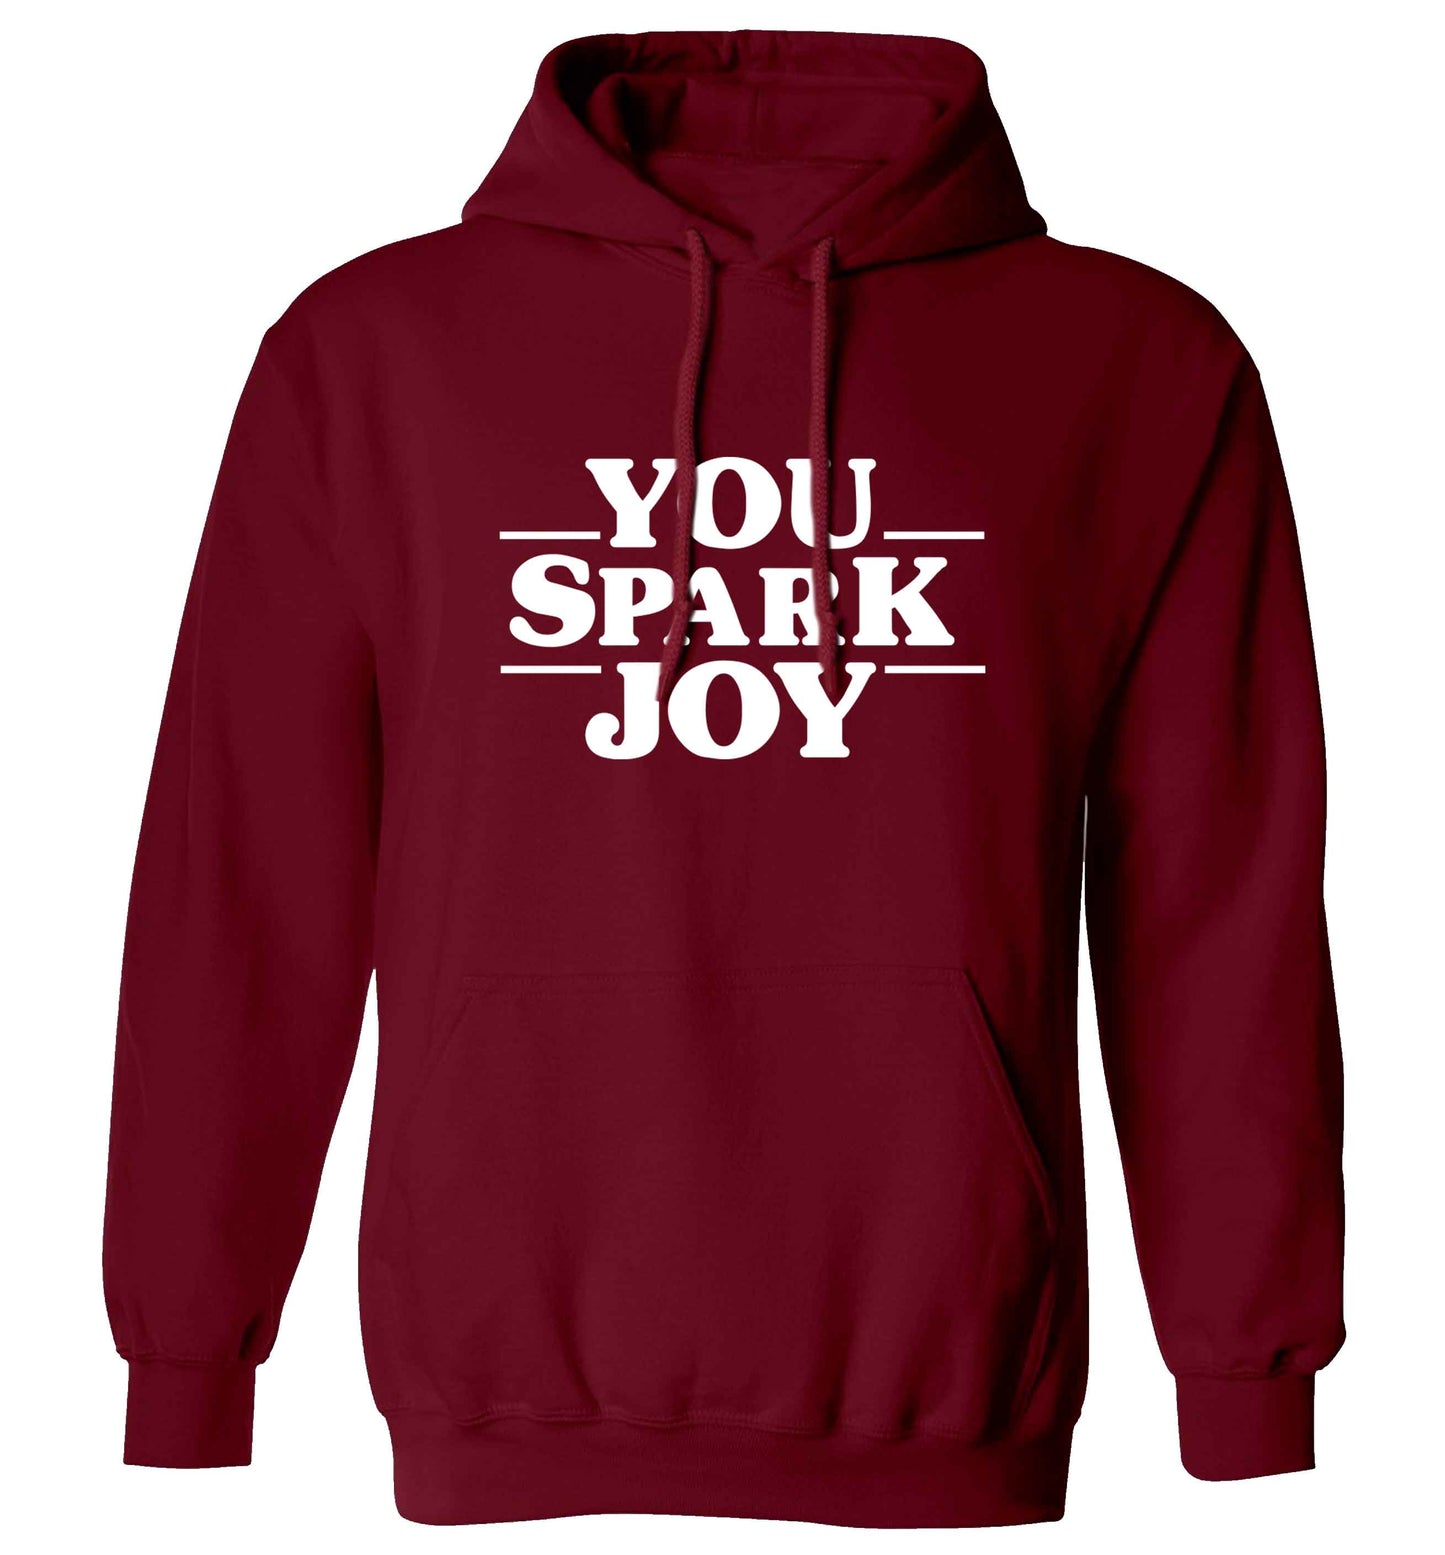 You spark joy adults unisex maroon hoodie 2XL